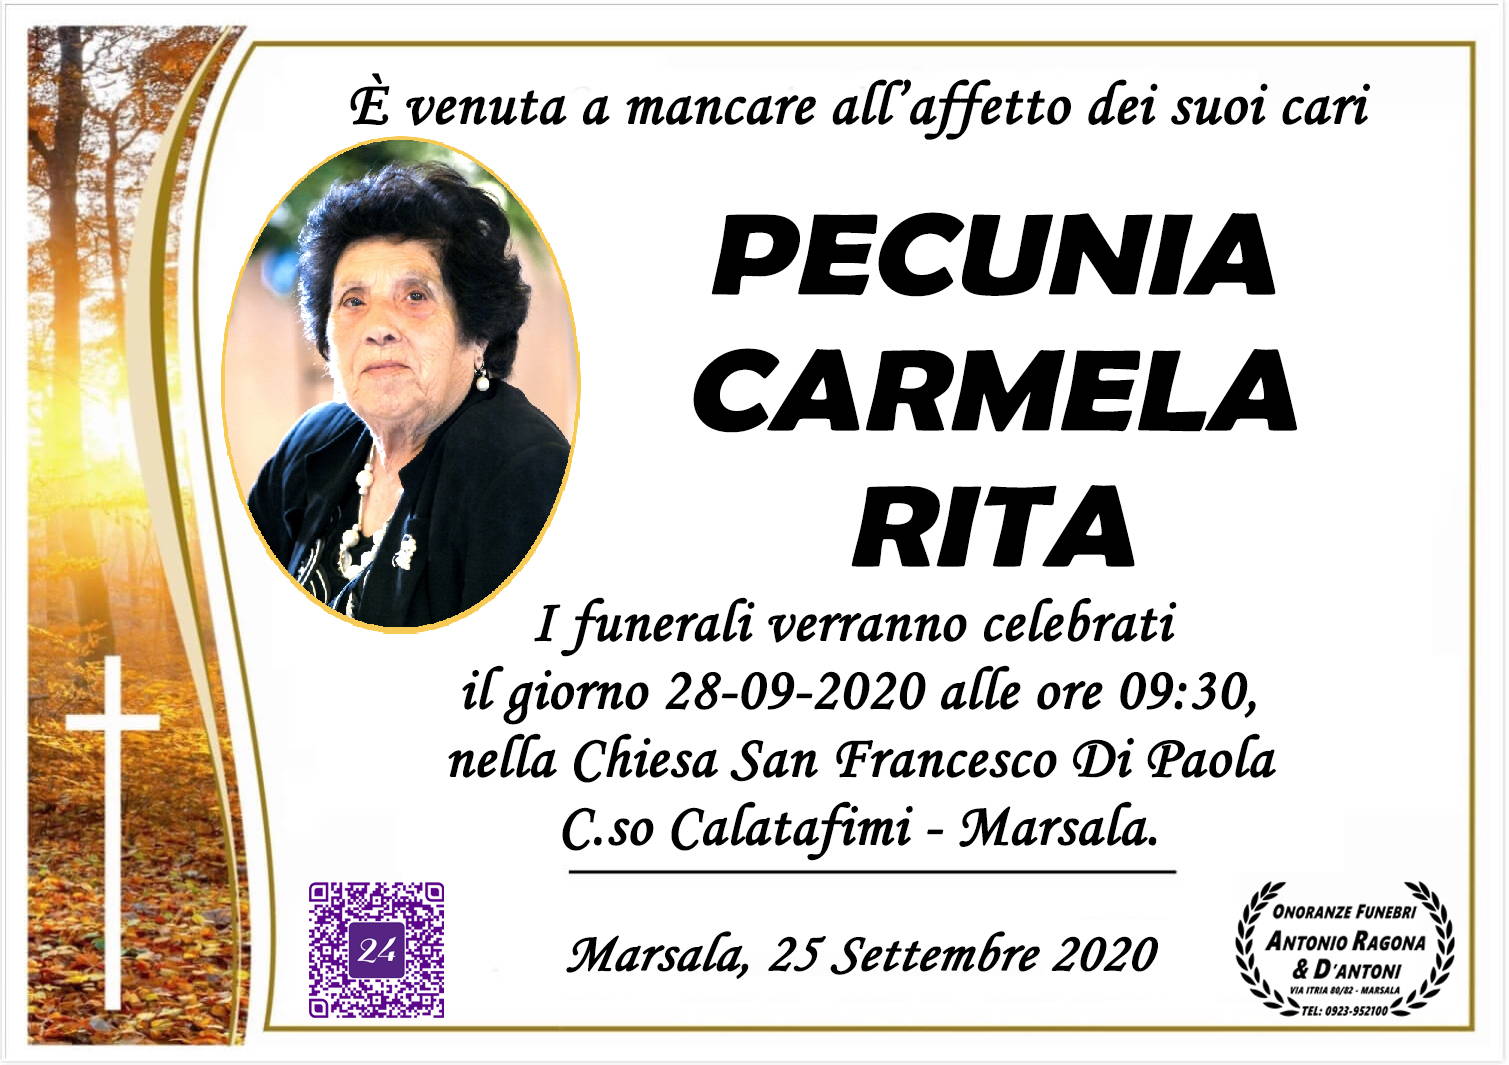 Carmela Rita Pecunia